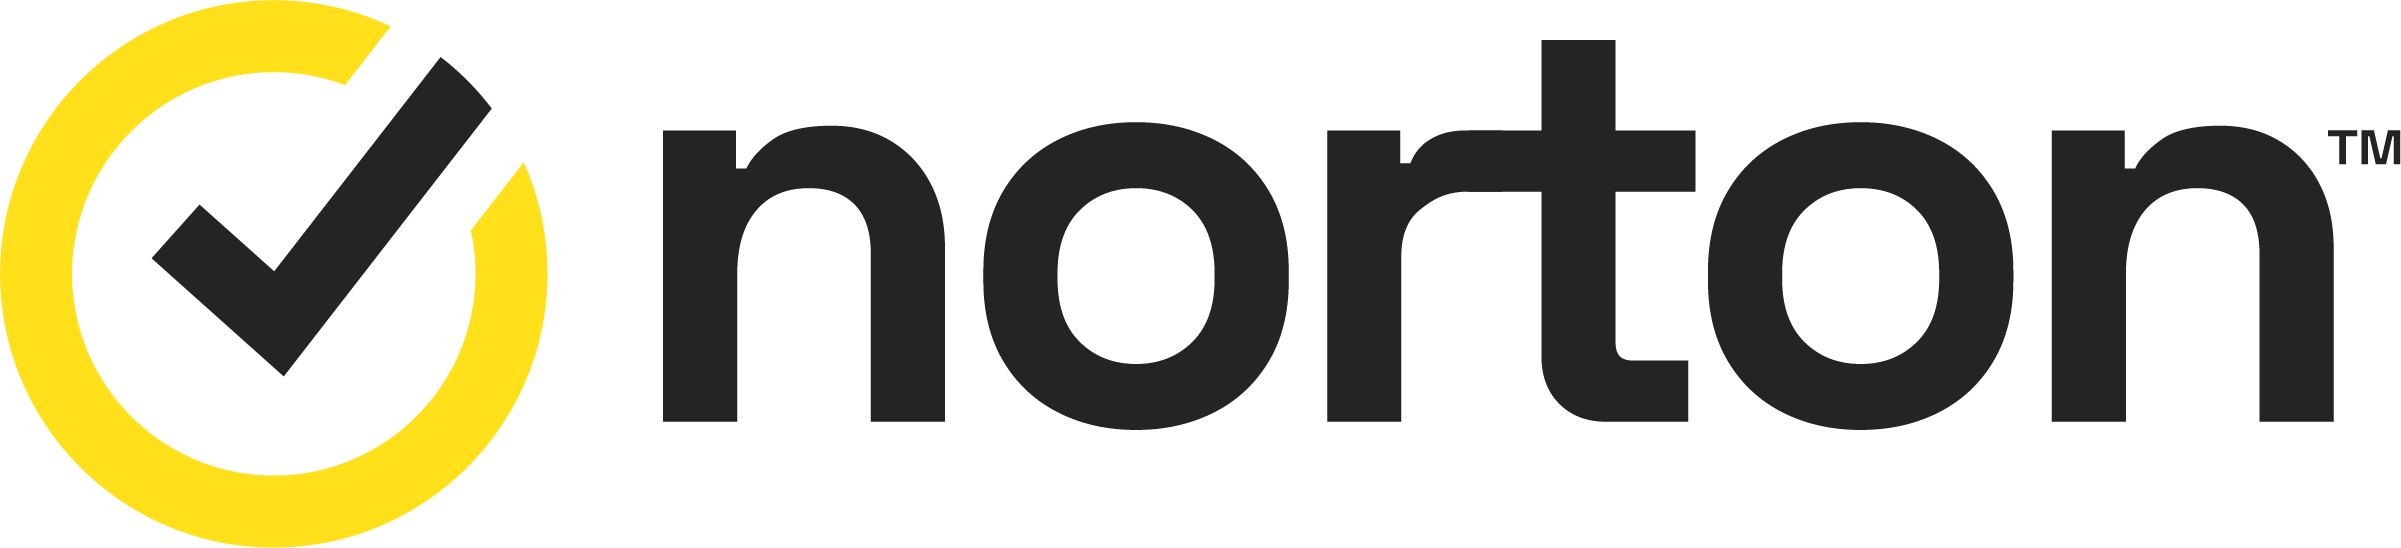 Código Norton